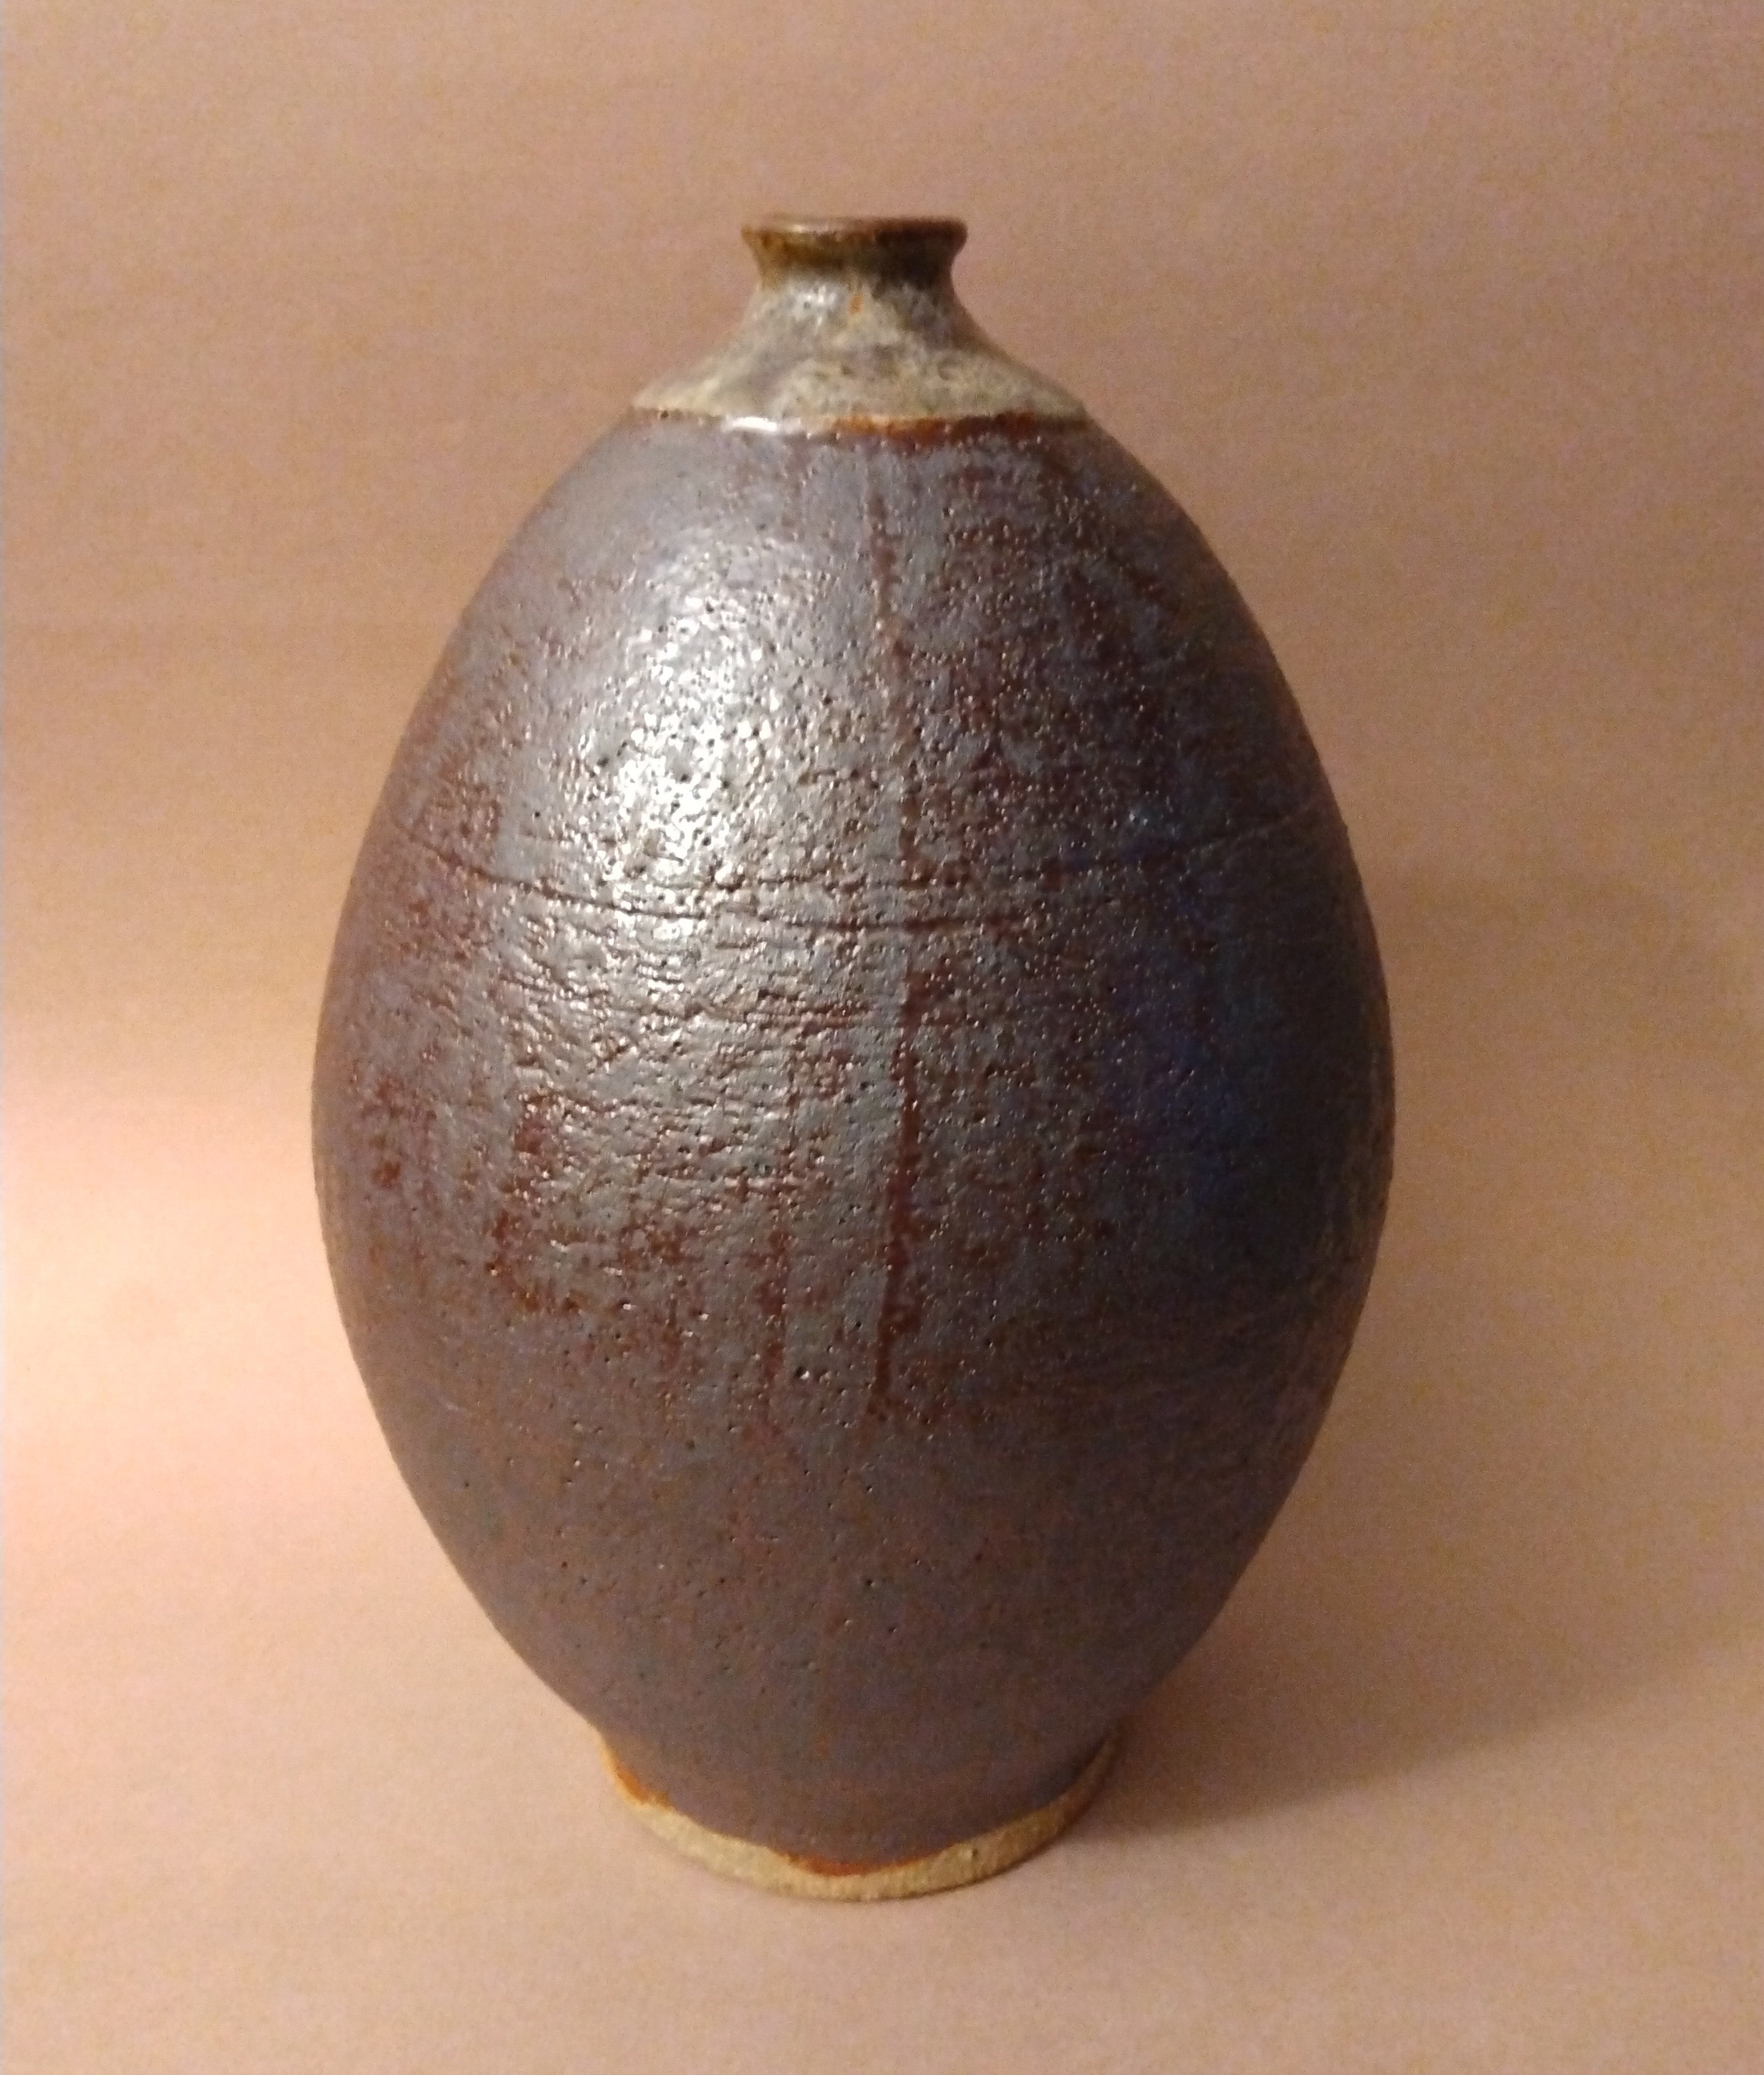 20% to Wajima Earthquake Relief - Wood-fired Vase, by Tim Lynch